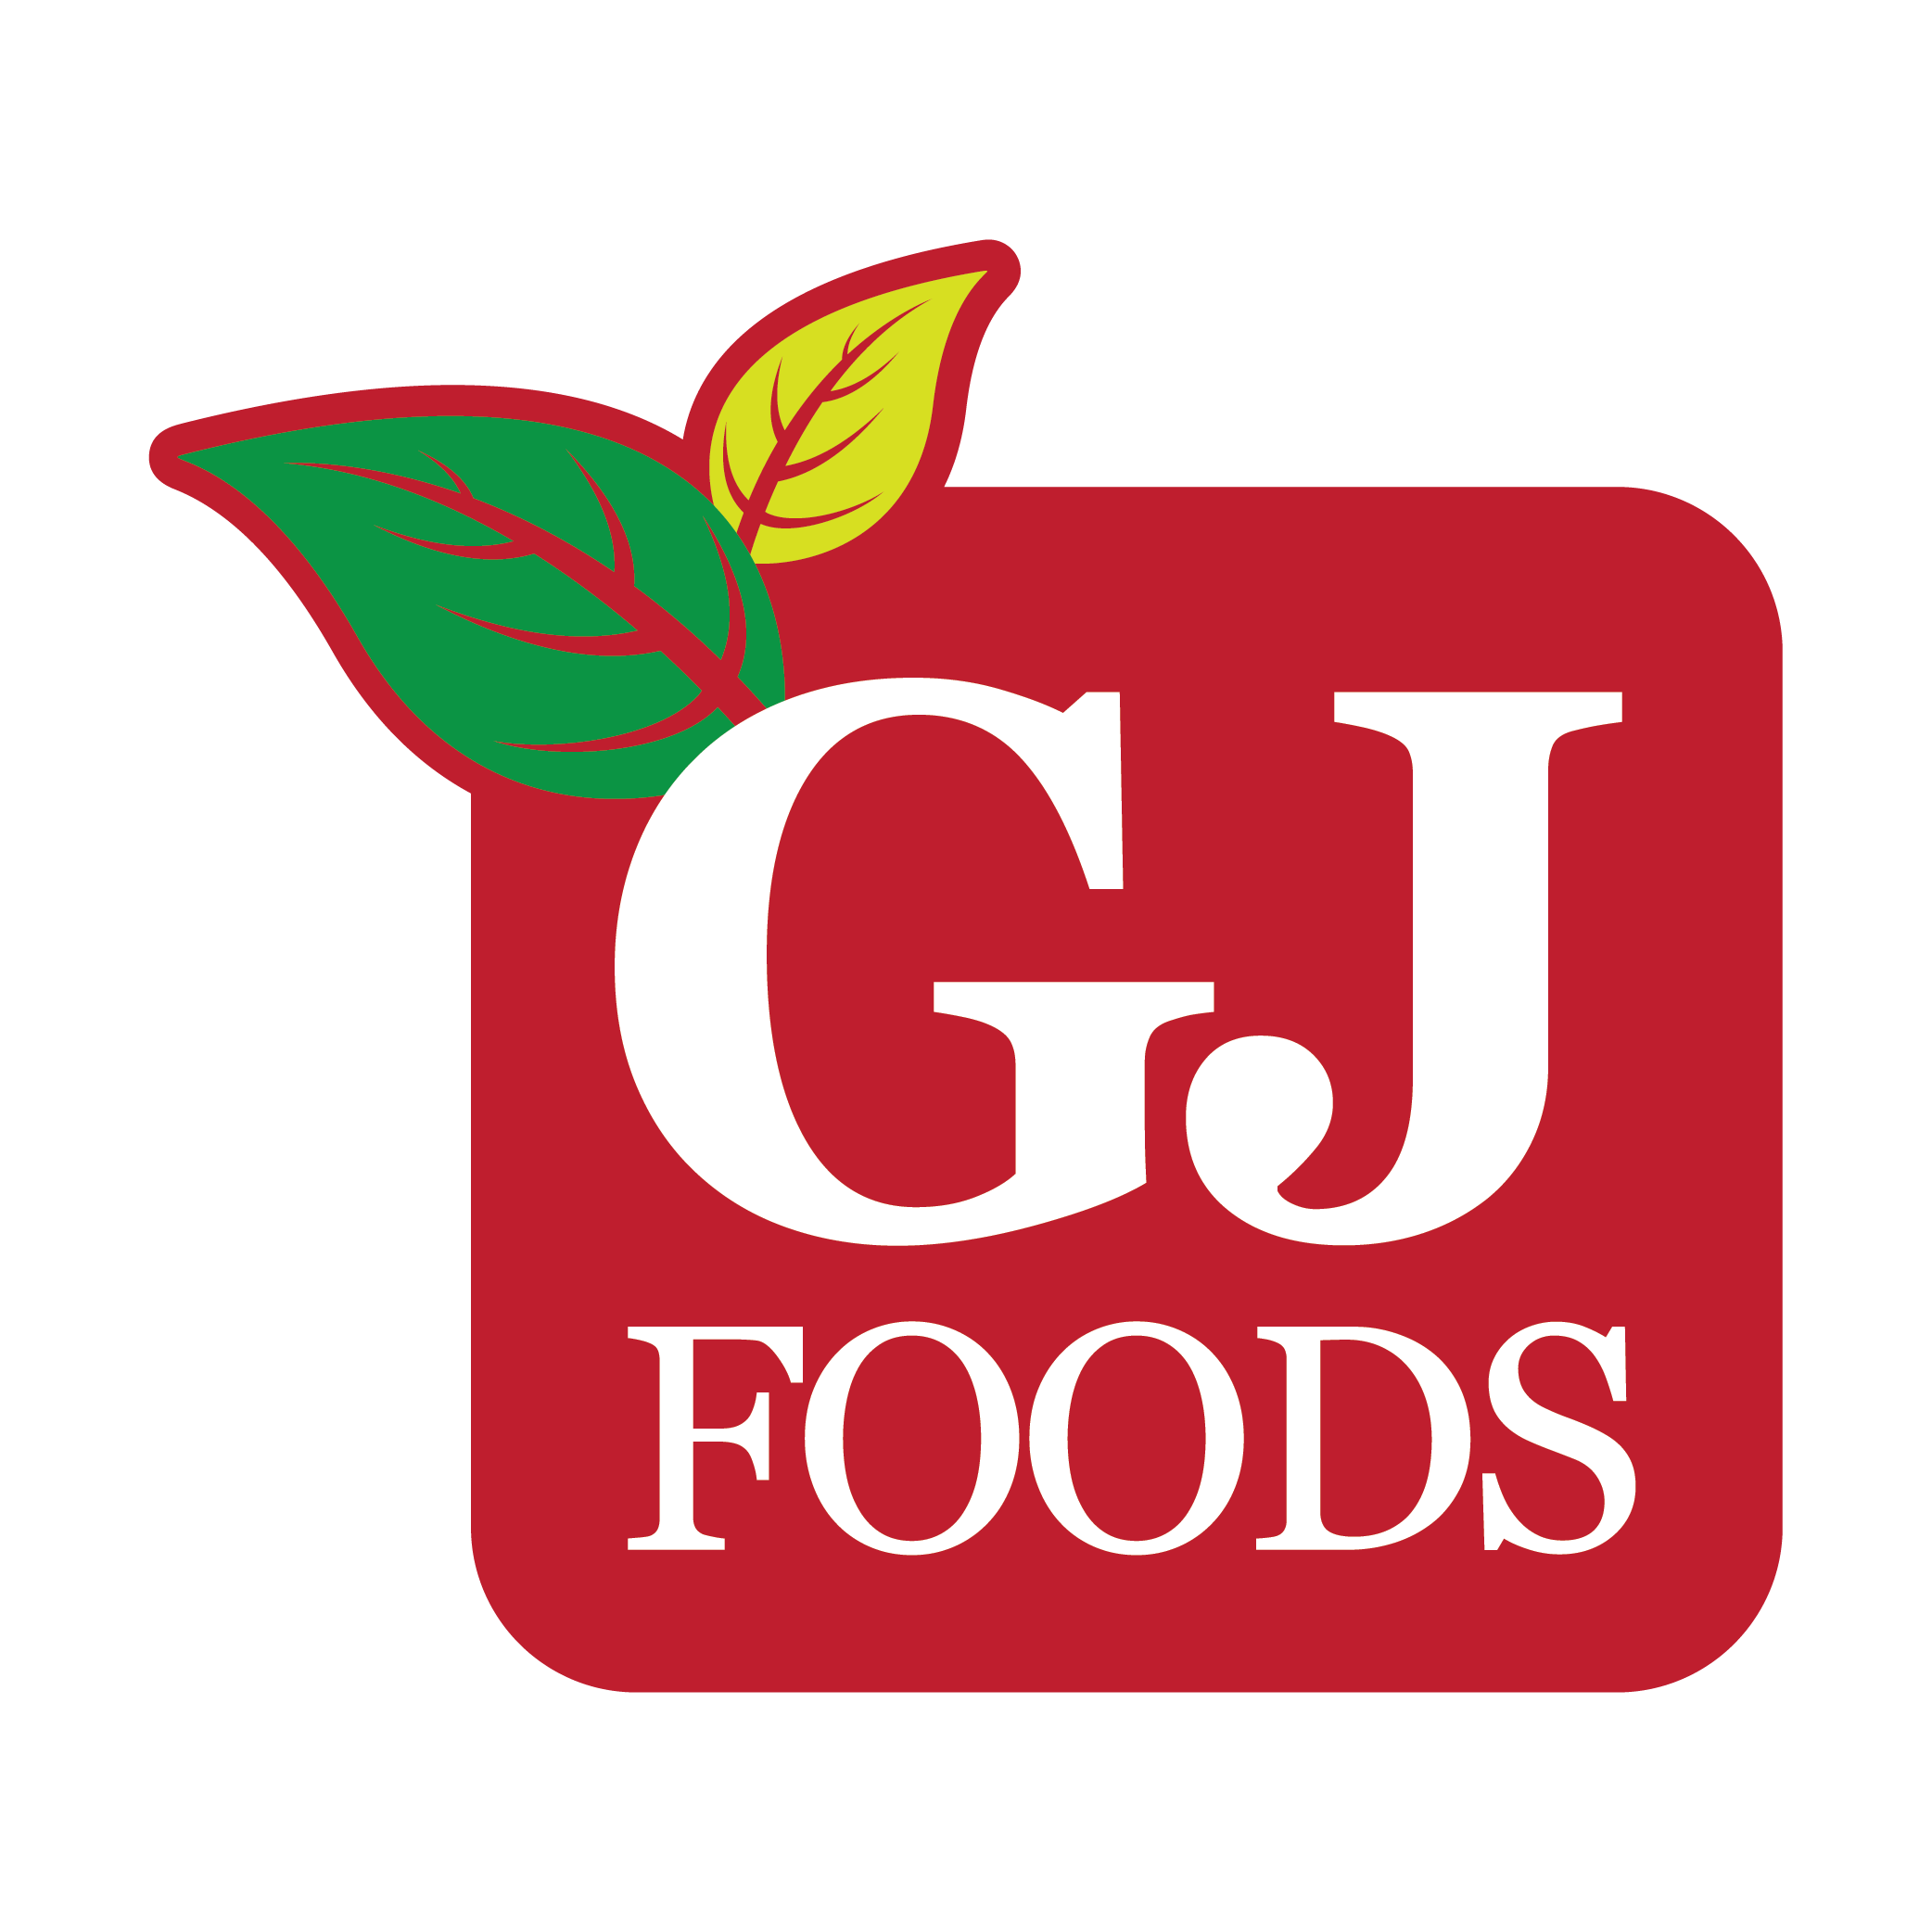 GJ Foods